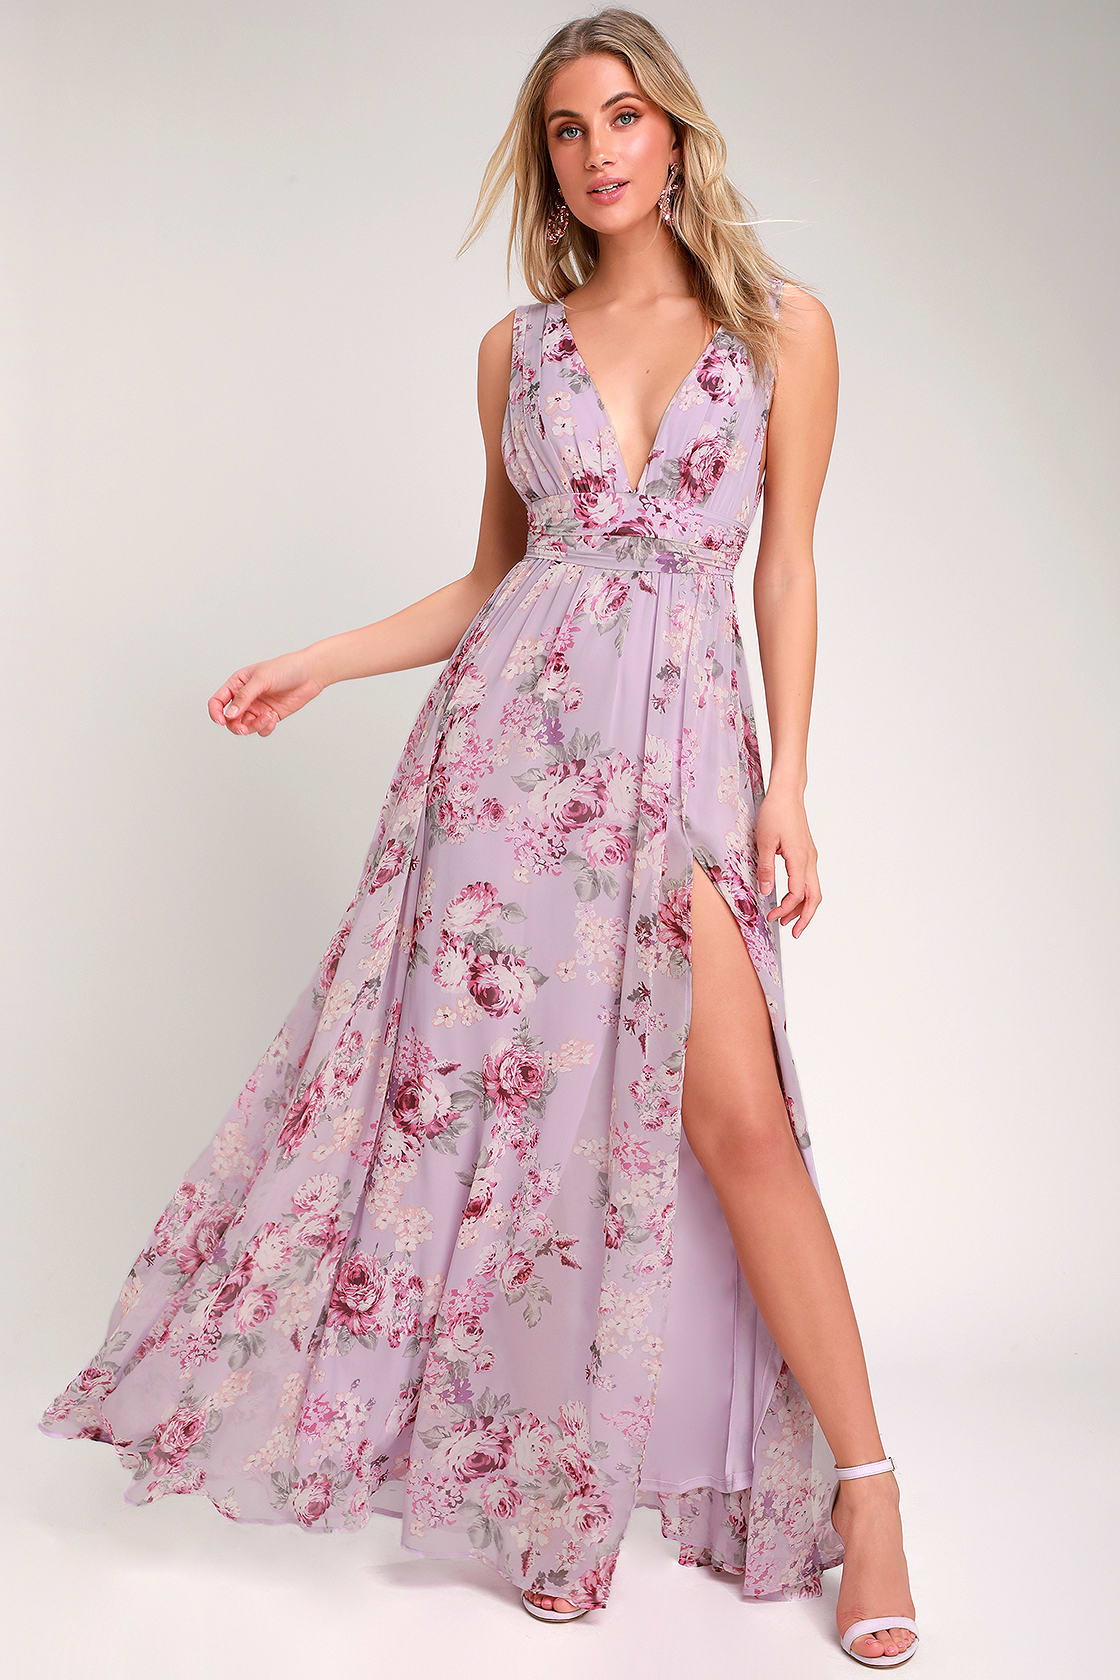 Purple Flower Maxi Dress for Wedding Guest to Wear to Mexico Wedding or Destination WEdding